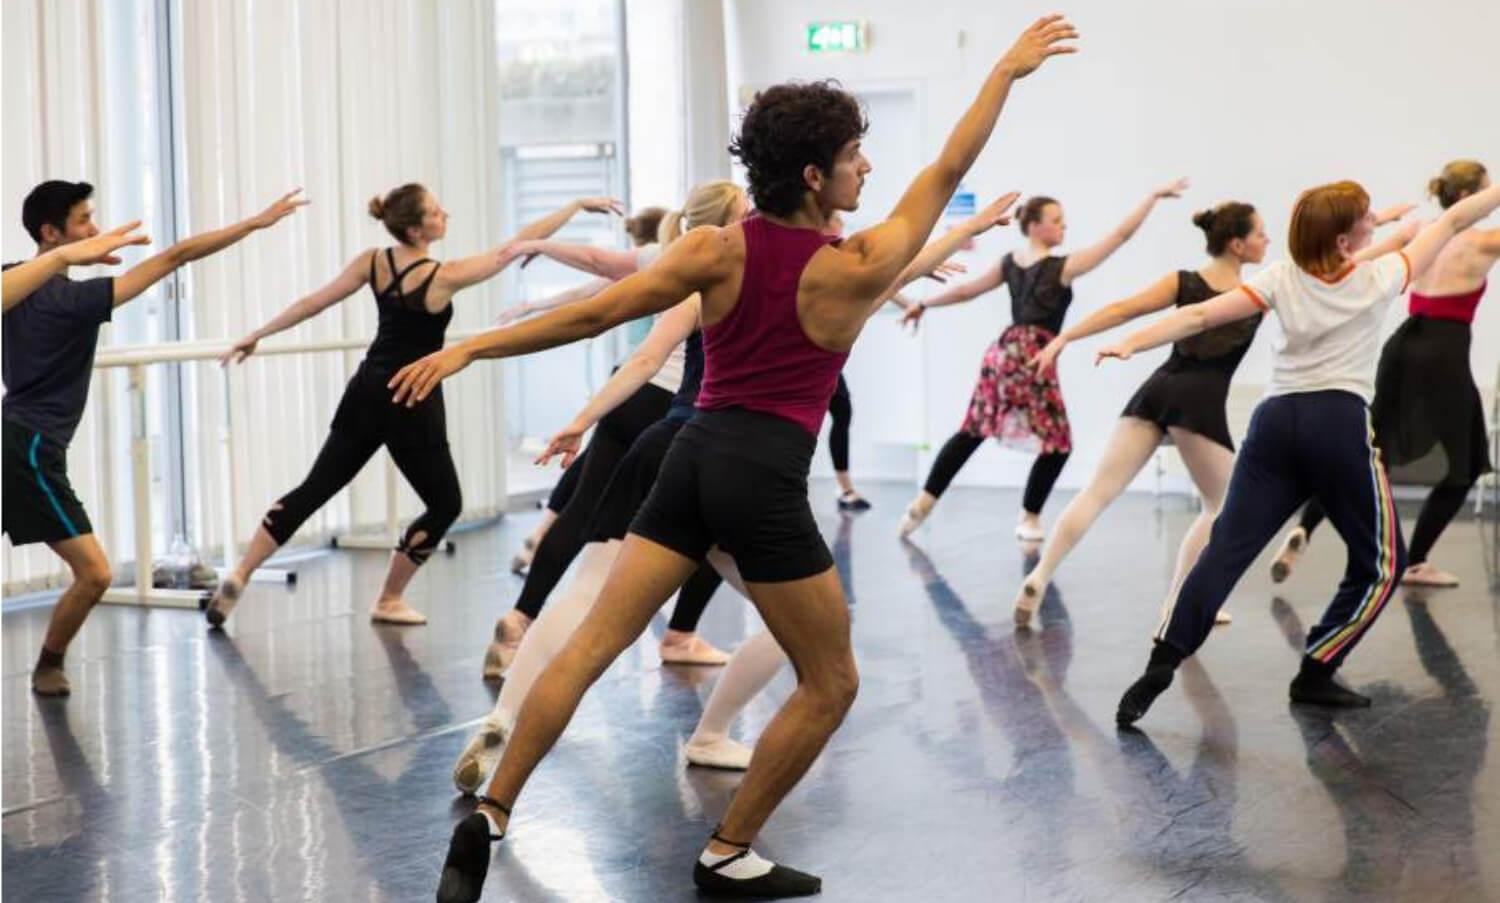 Ballet dancers at Dancebase, Edinburgh.  Image by: Amy Sinead Photography